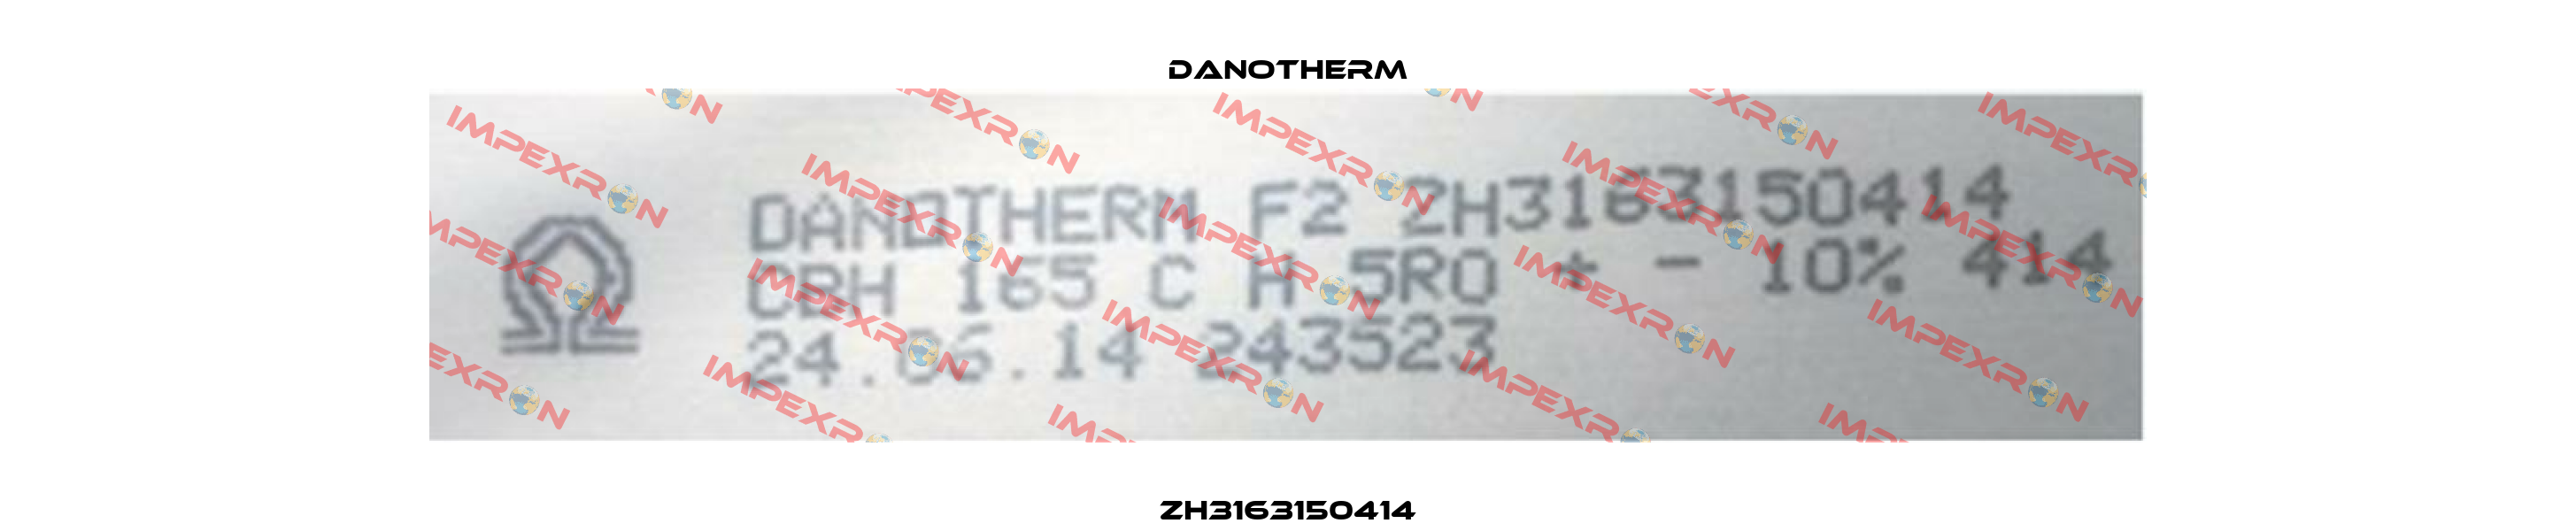 ZH3163150414 Danotherm